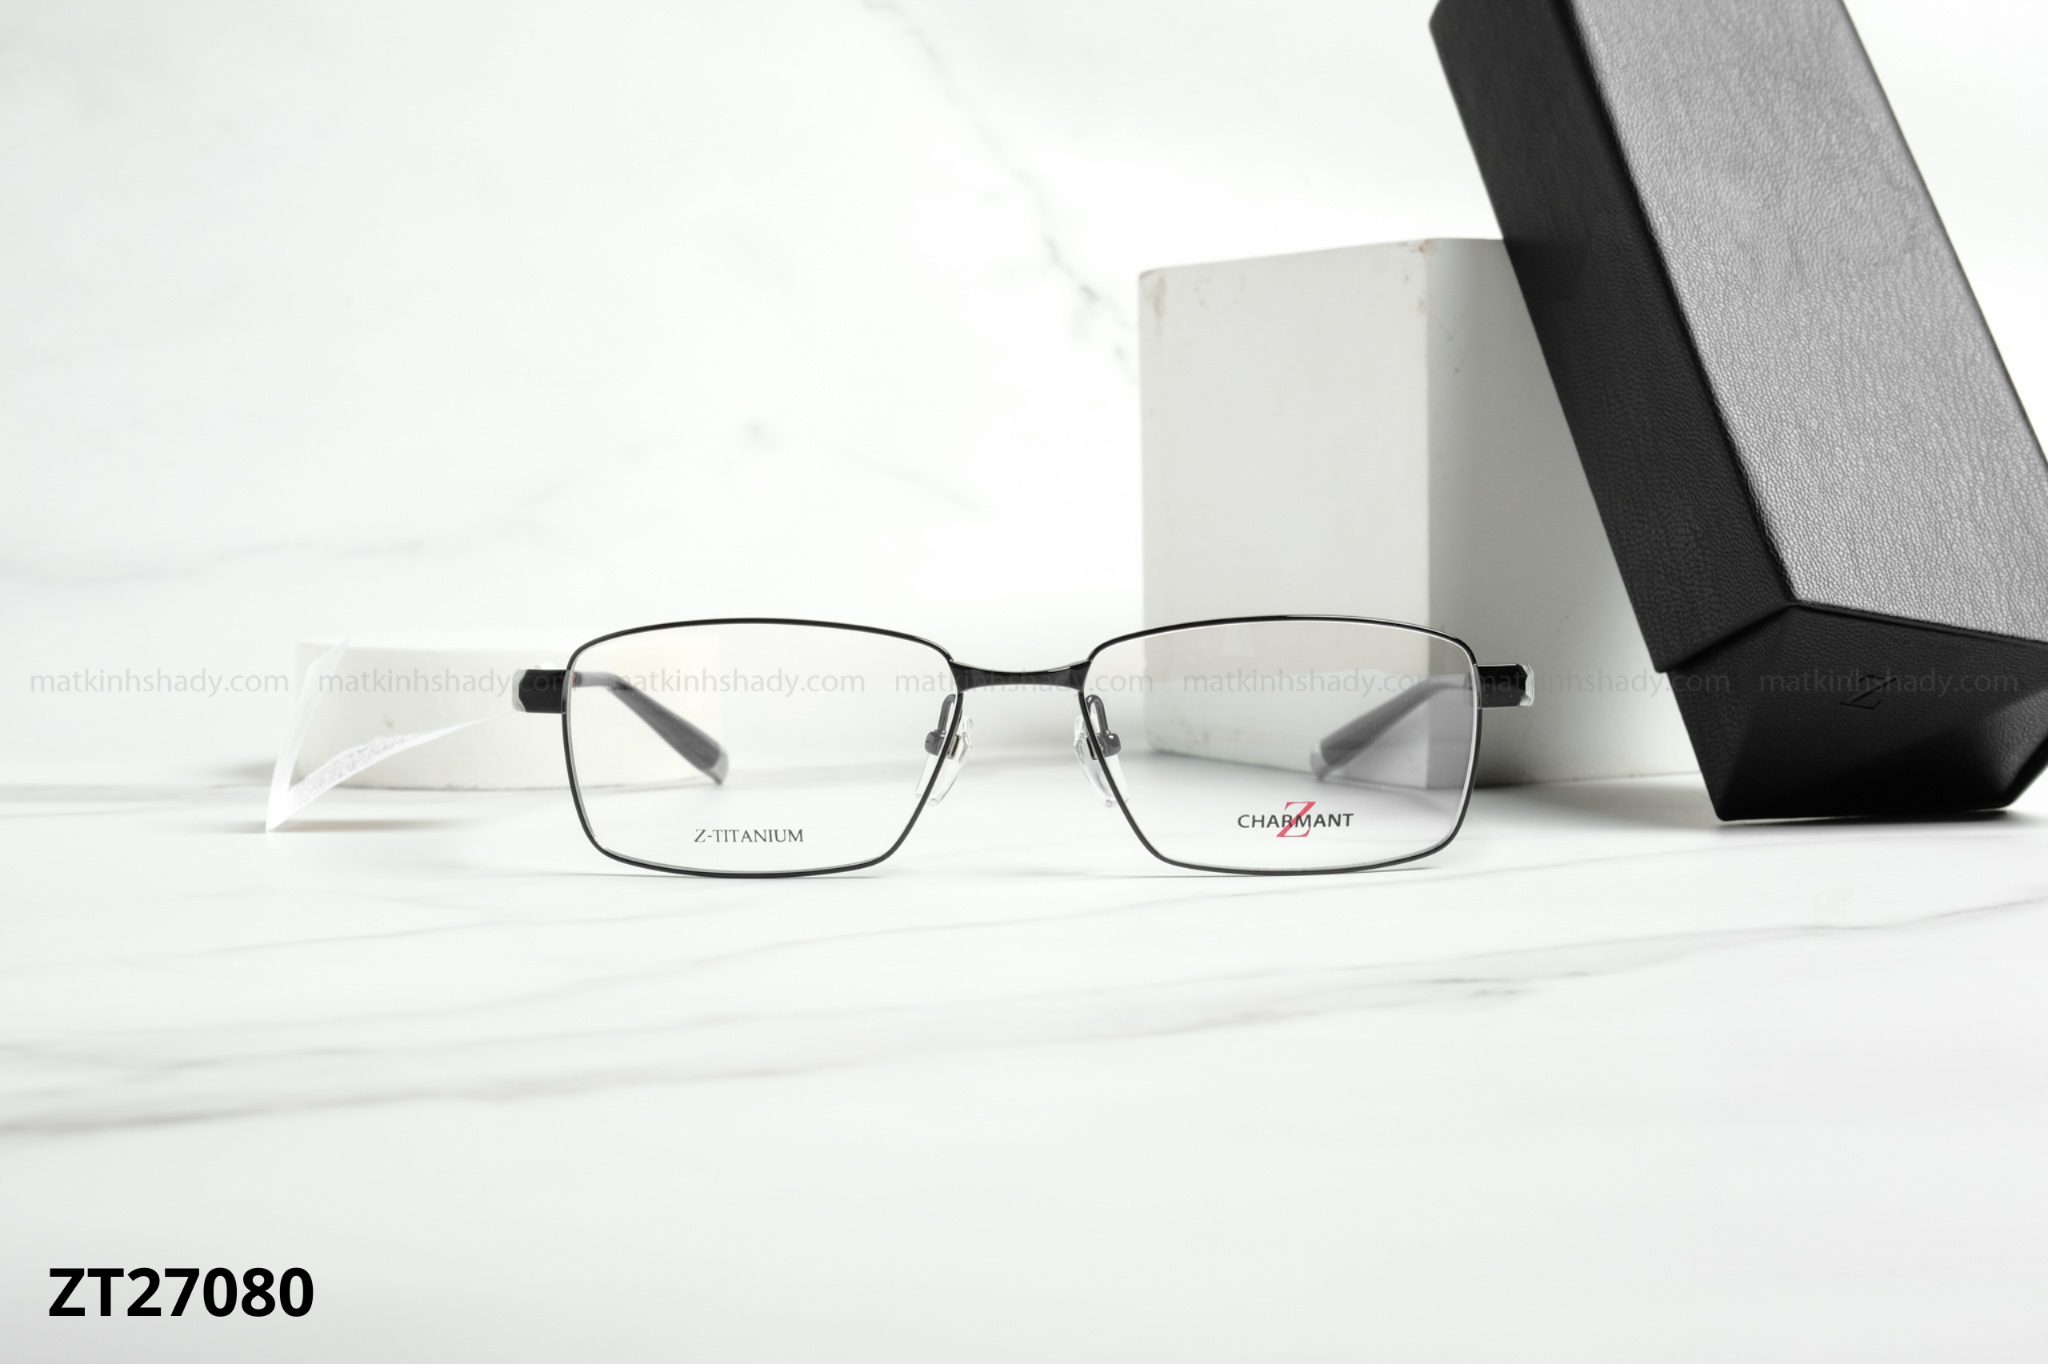  Charmant Z Eyewear - Glasses - ZT27080 